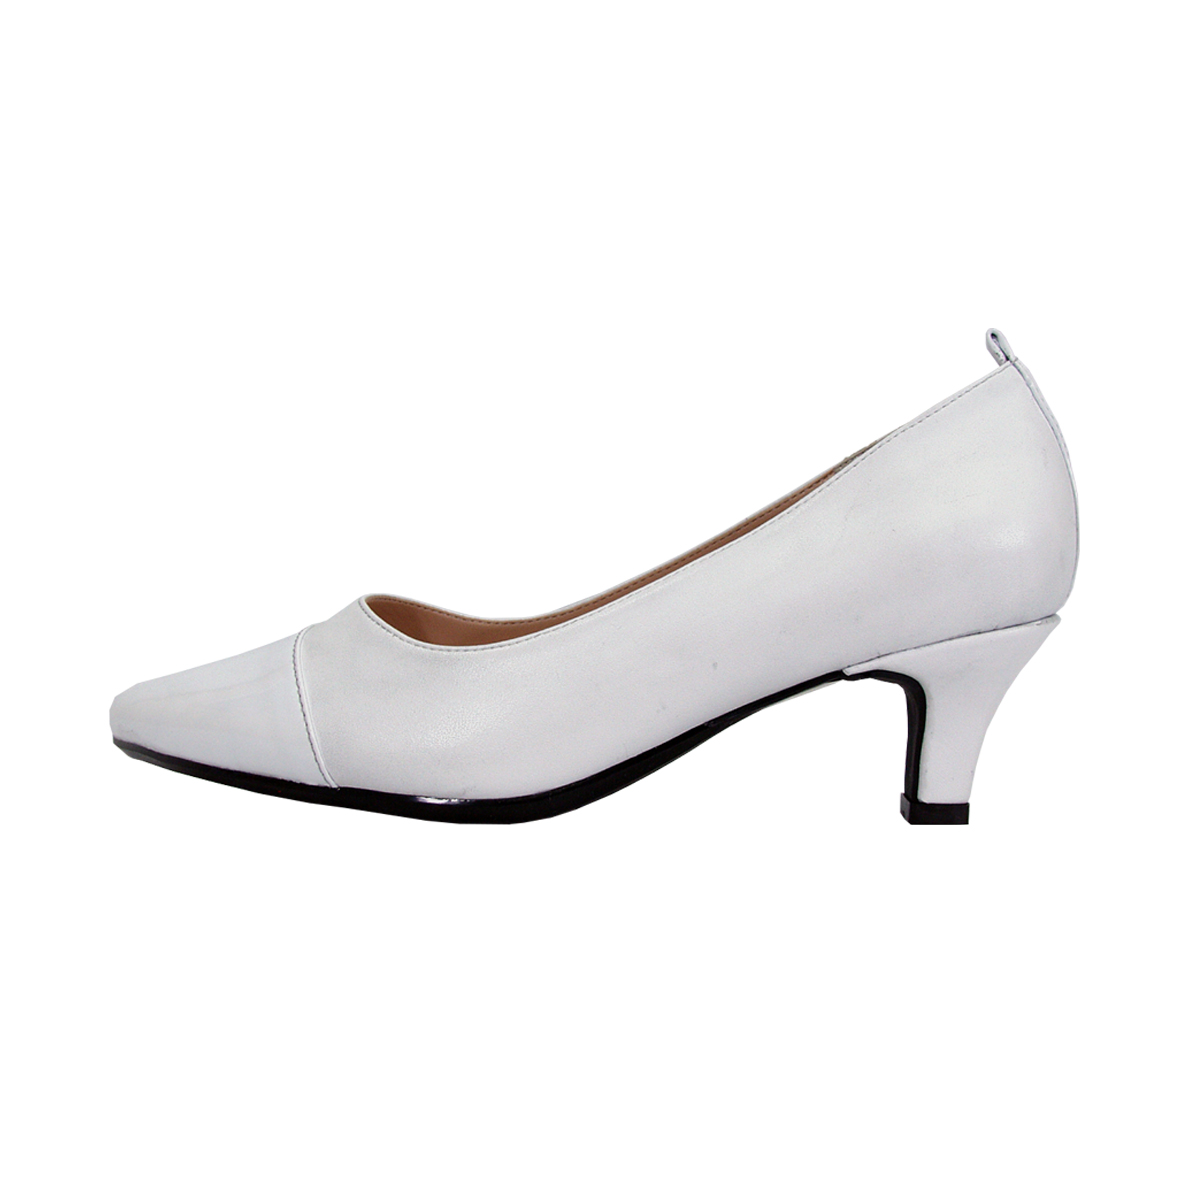 PEERAGE Arlene Women's Wide Width Casual Comfort Mid Heel Dress Shoes for Wedding, Prom, Evening, Work WHITE 10.5 - image 3 of 6